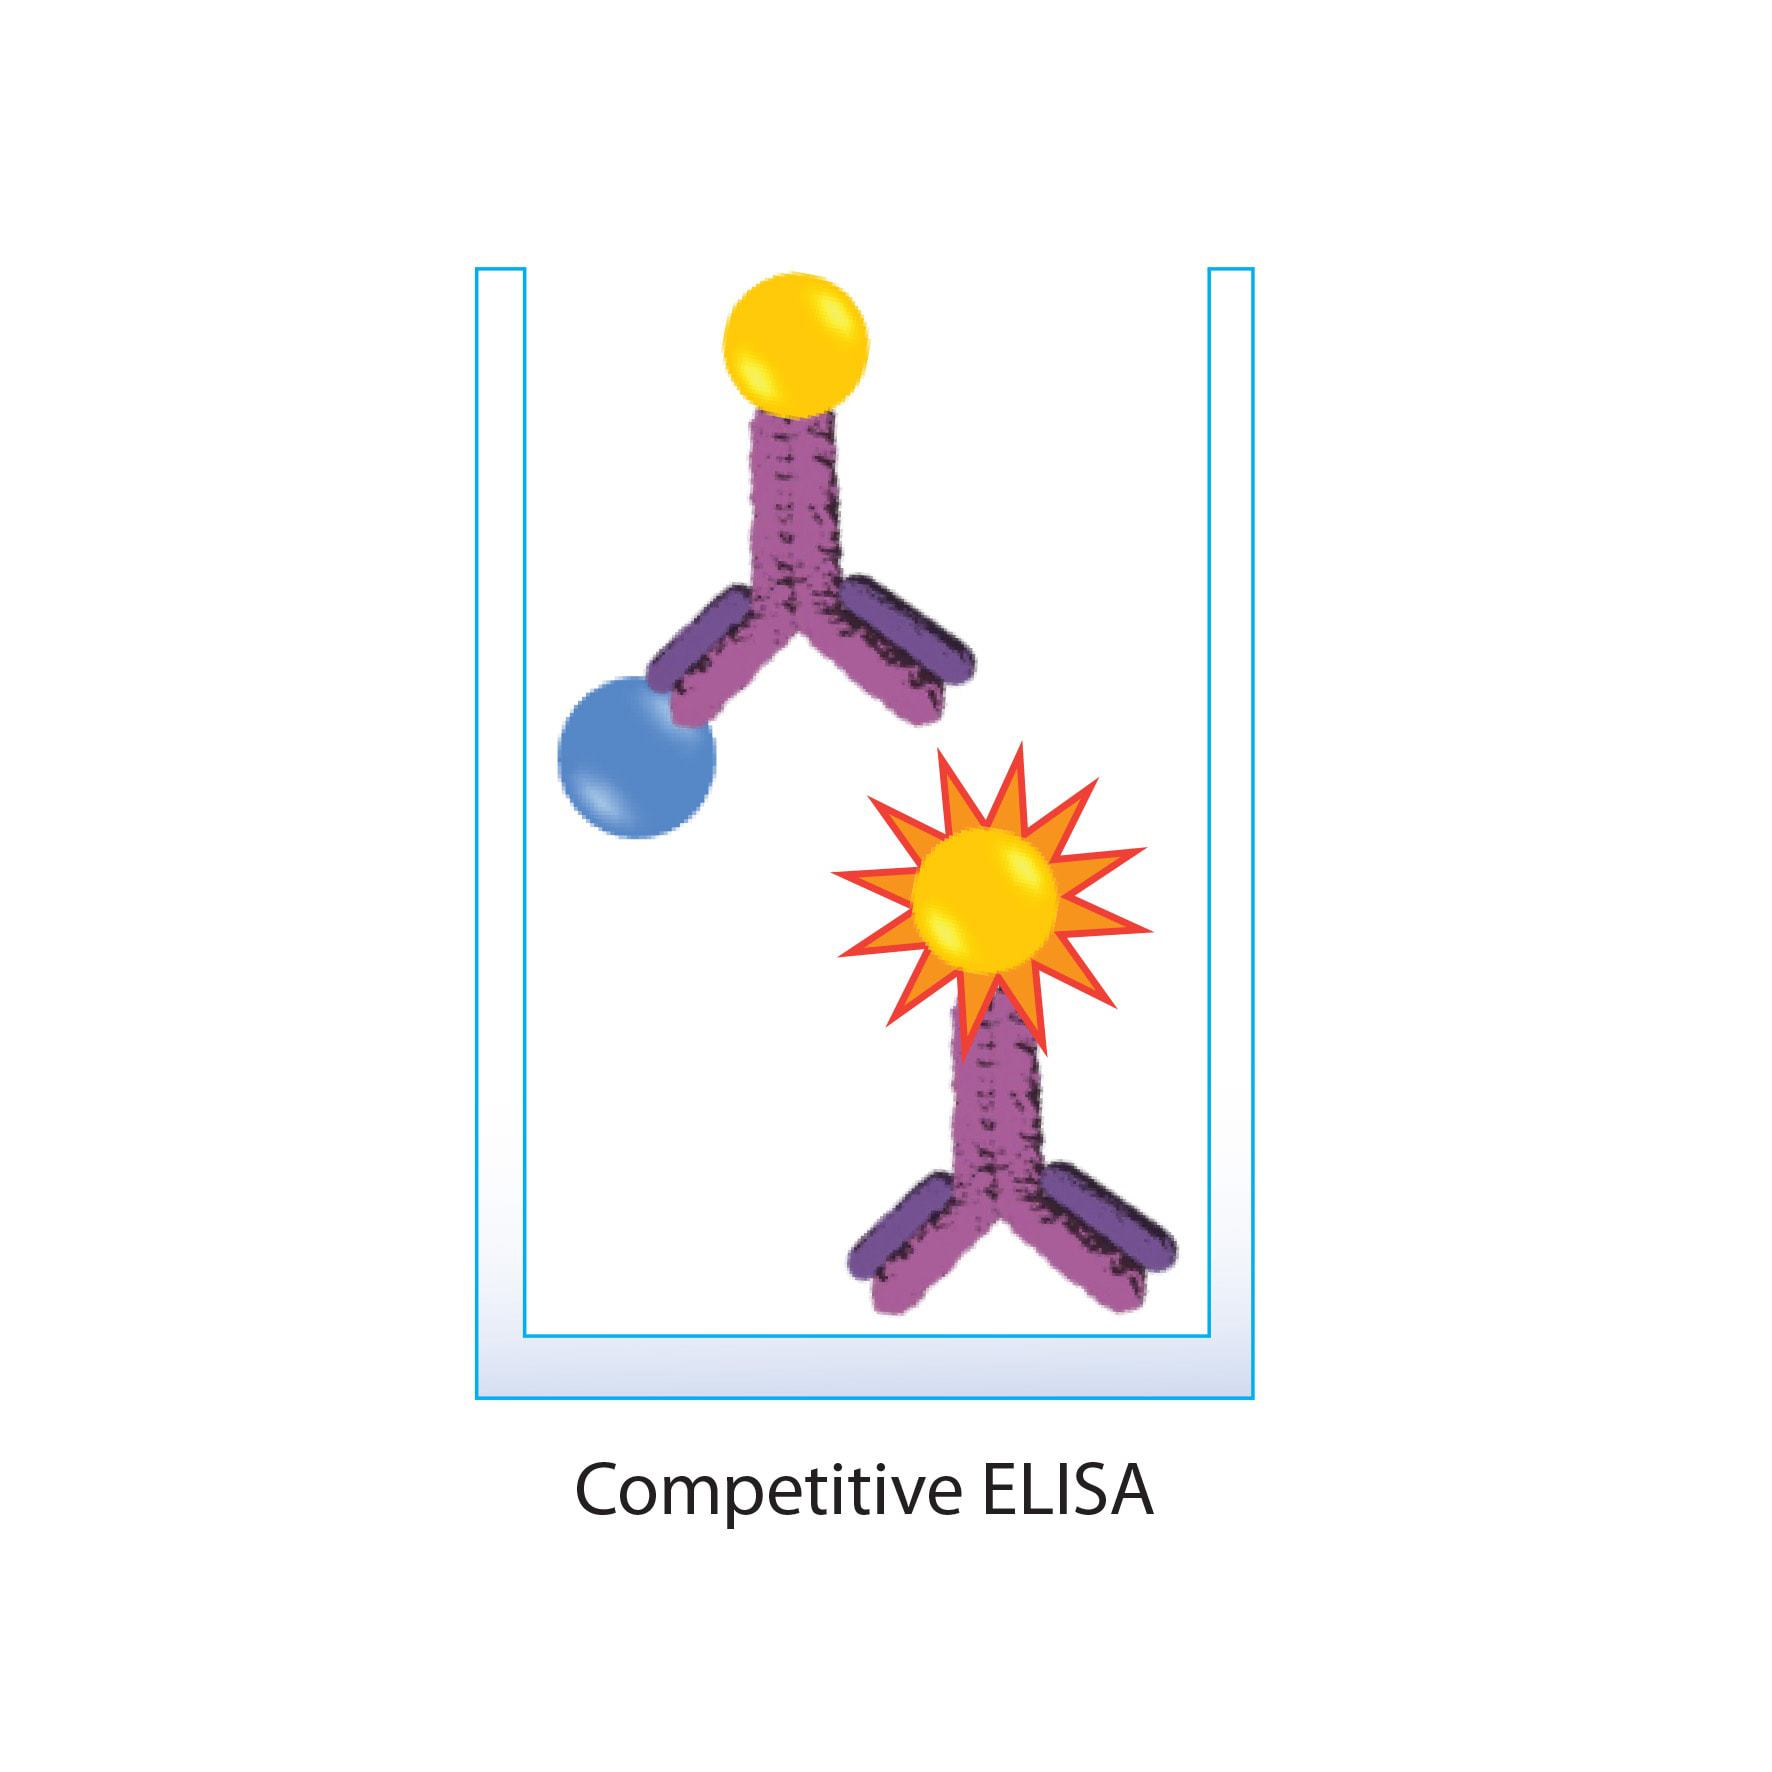 Competitive Elisa